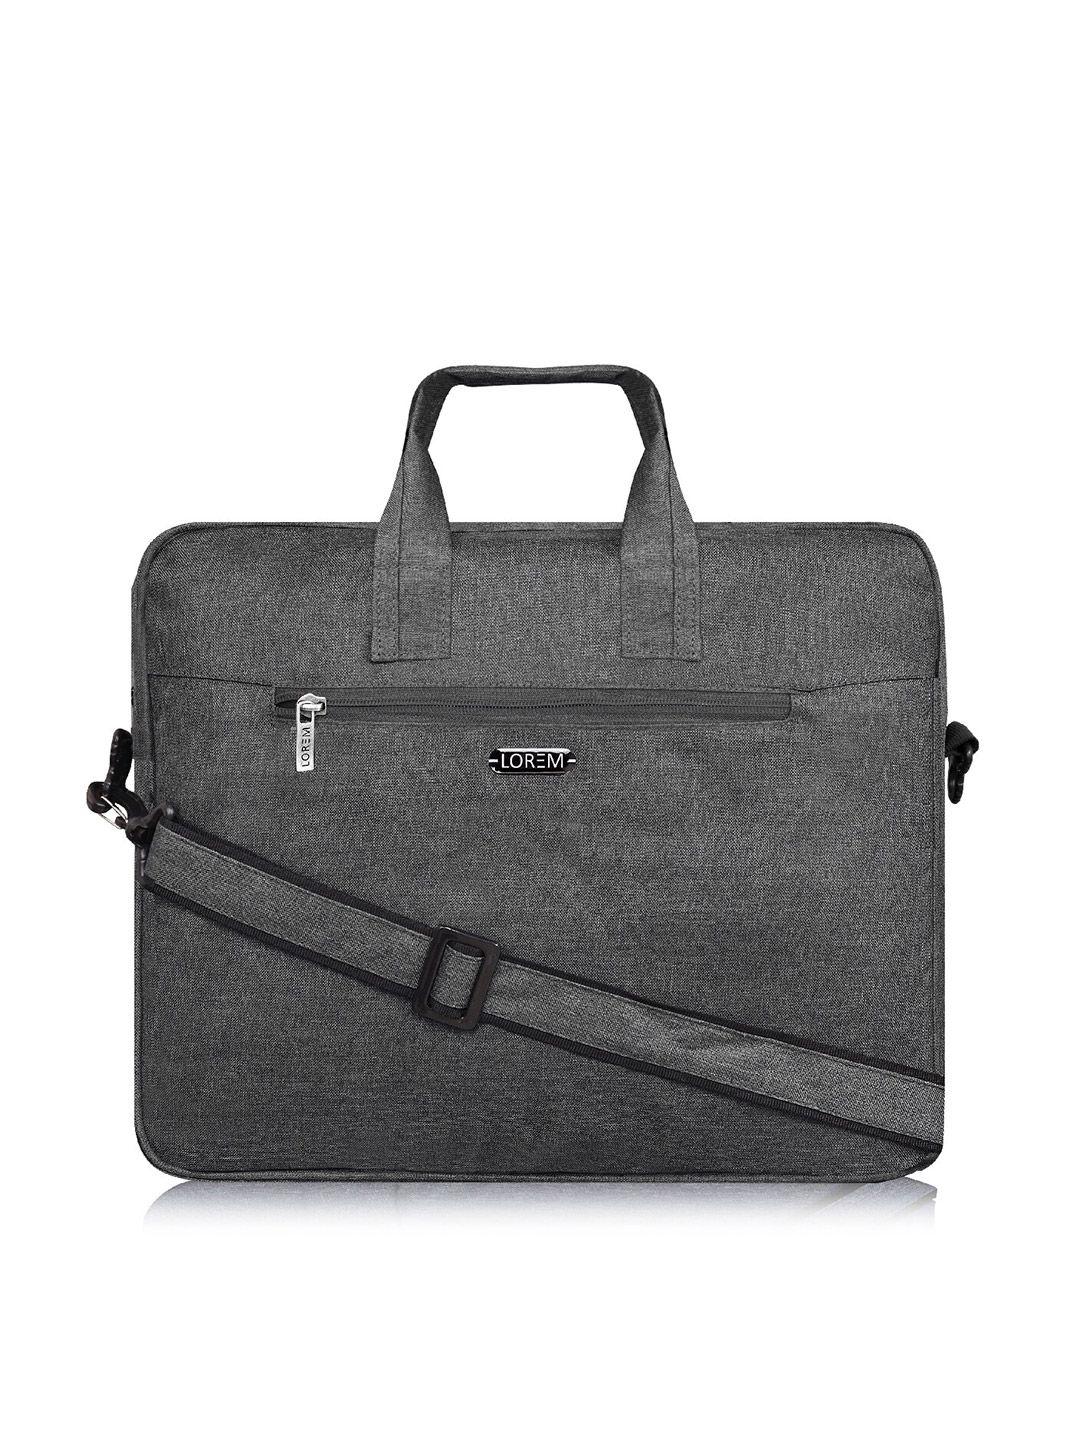 lorem unisex grey laptop bag